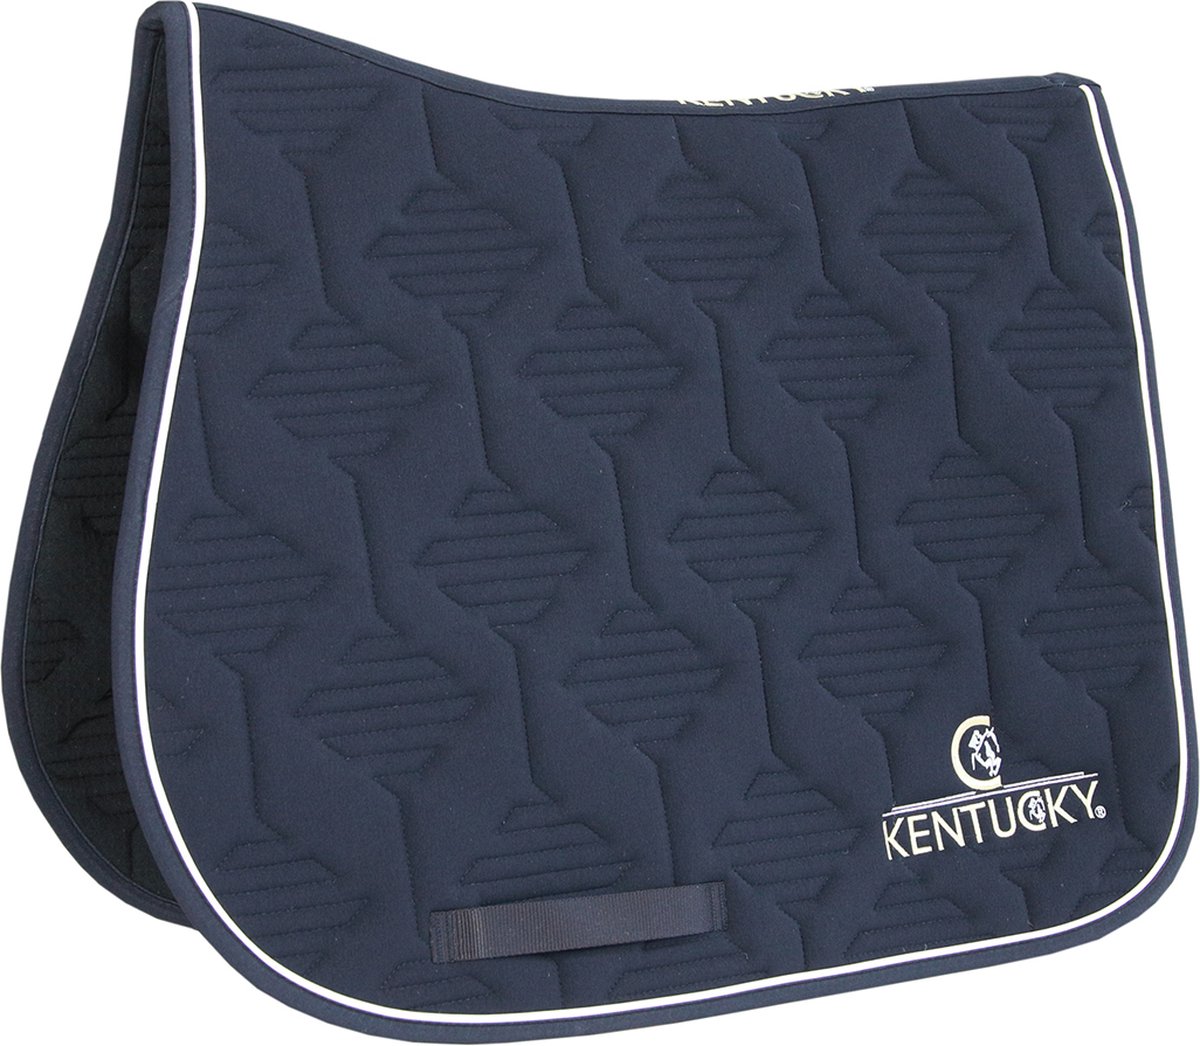 Kentucky Zadeldek Kentucky Color Edition Donkerblauw